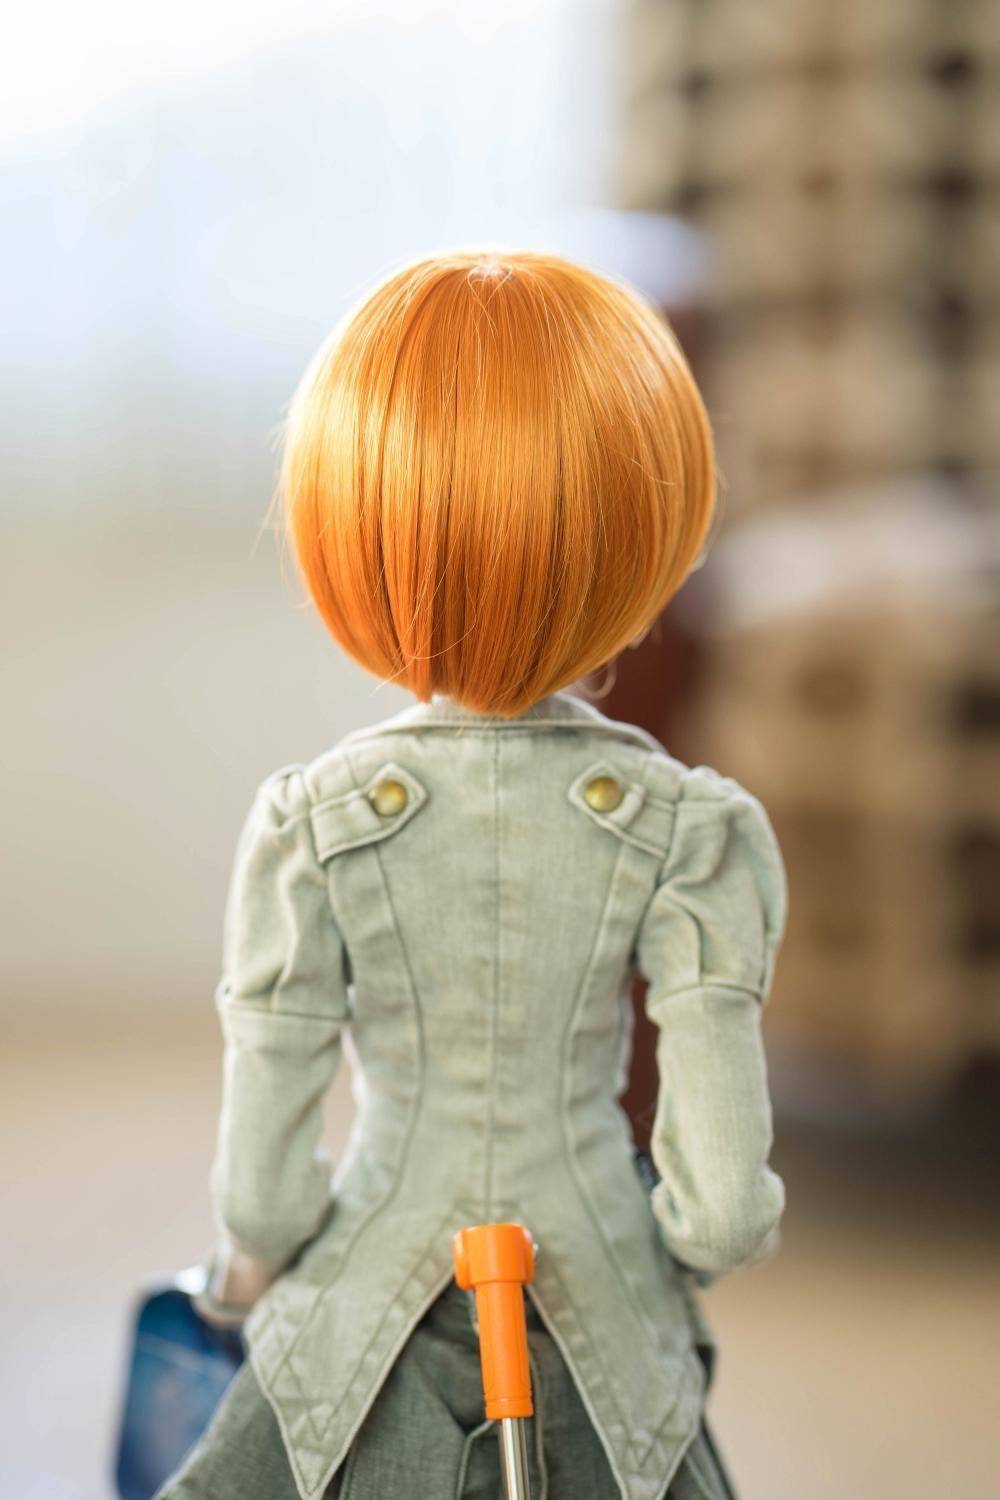 Custom doll WIG for Smart Dolls- Heat Safe - Tangle Resistant- 8" head size of Bjd, SD, Dollfie Dream dolls carrot red bob